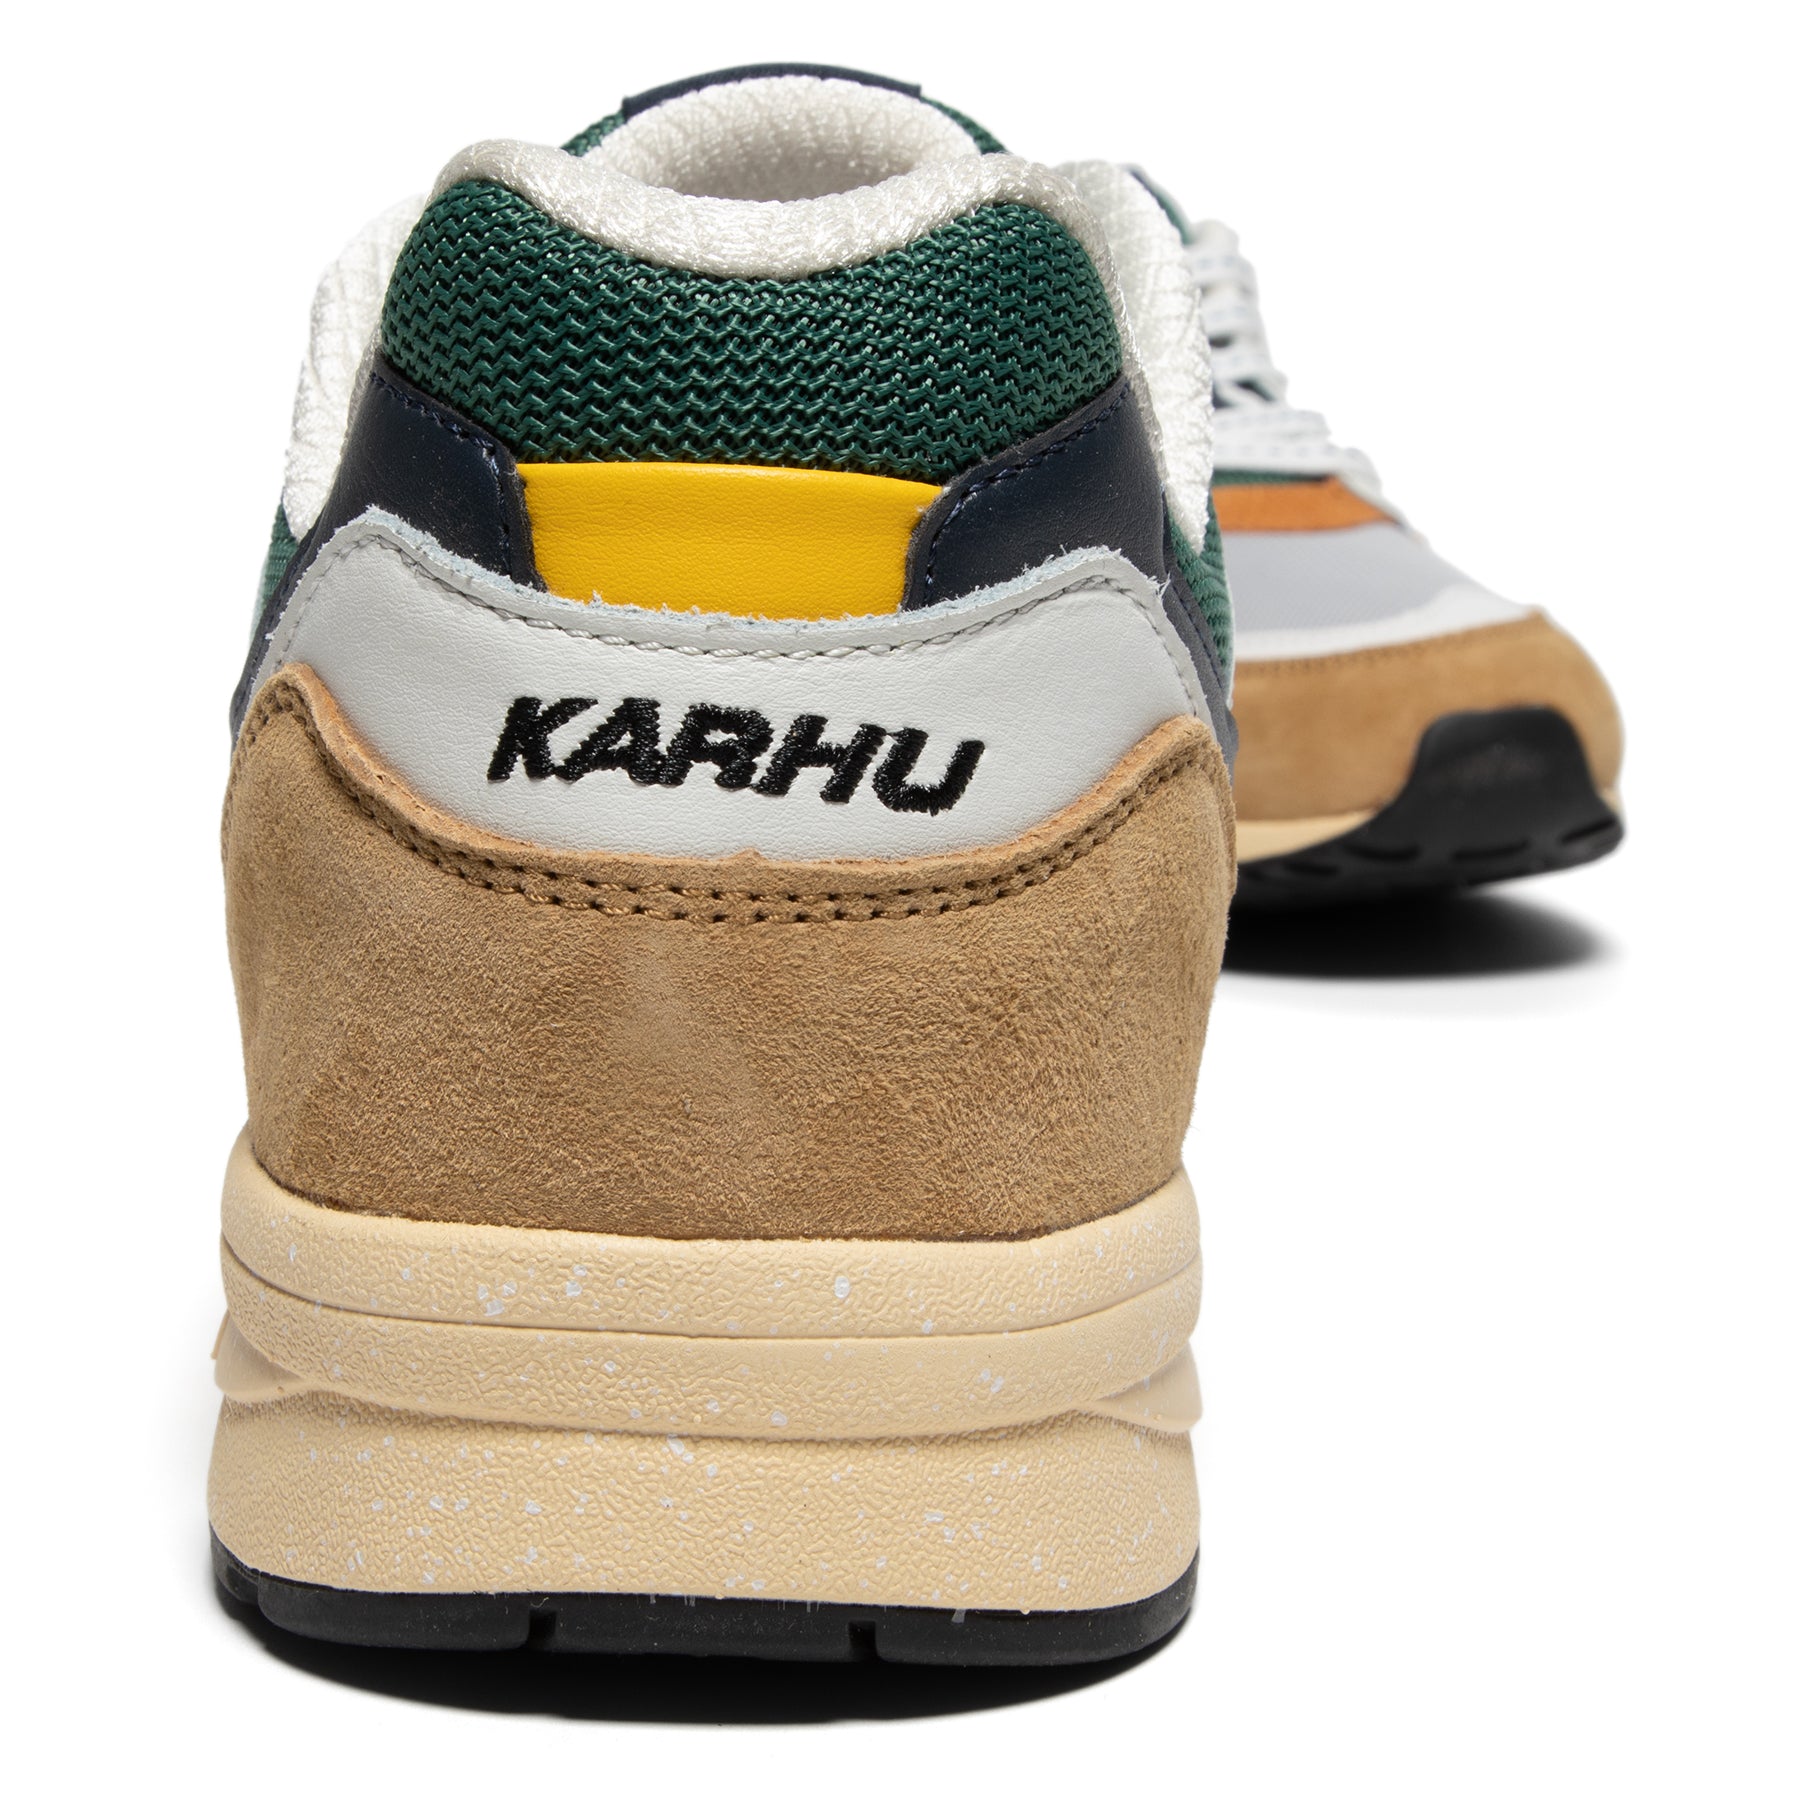 Karhu Legacy 96 men's shoes